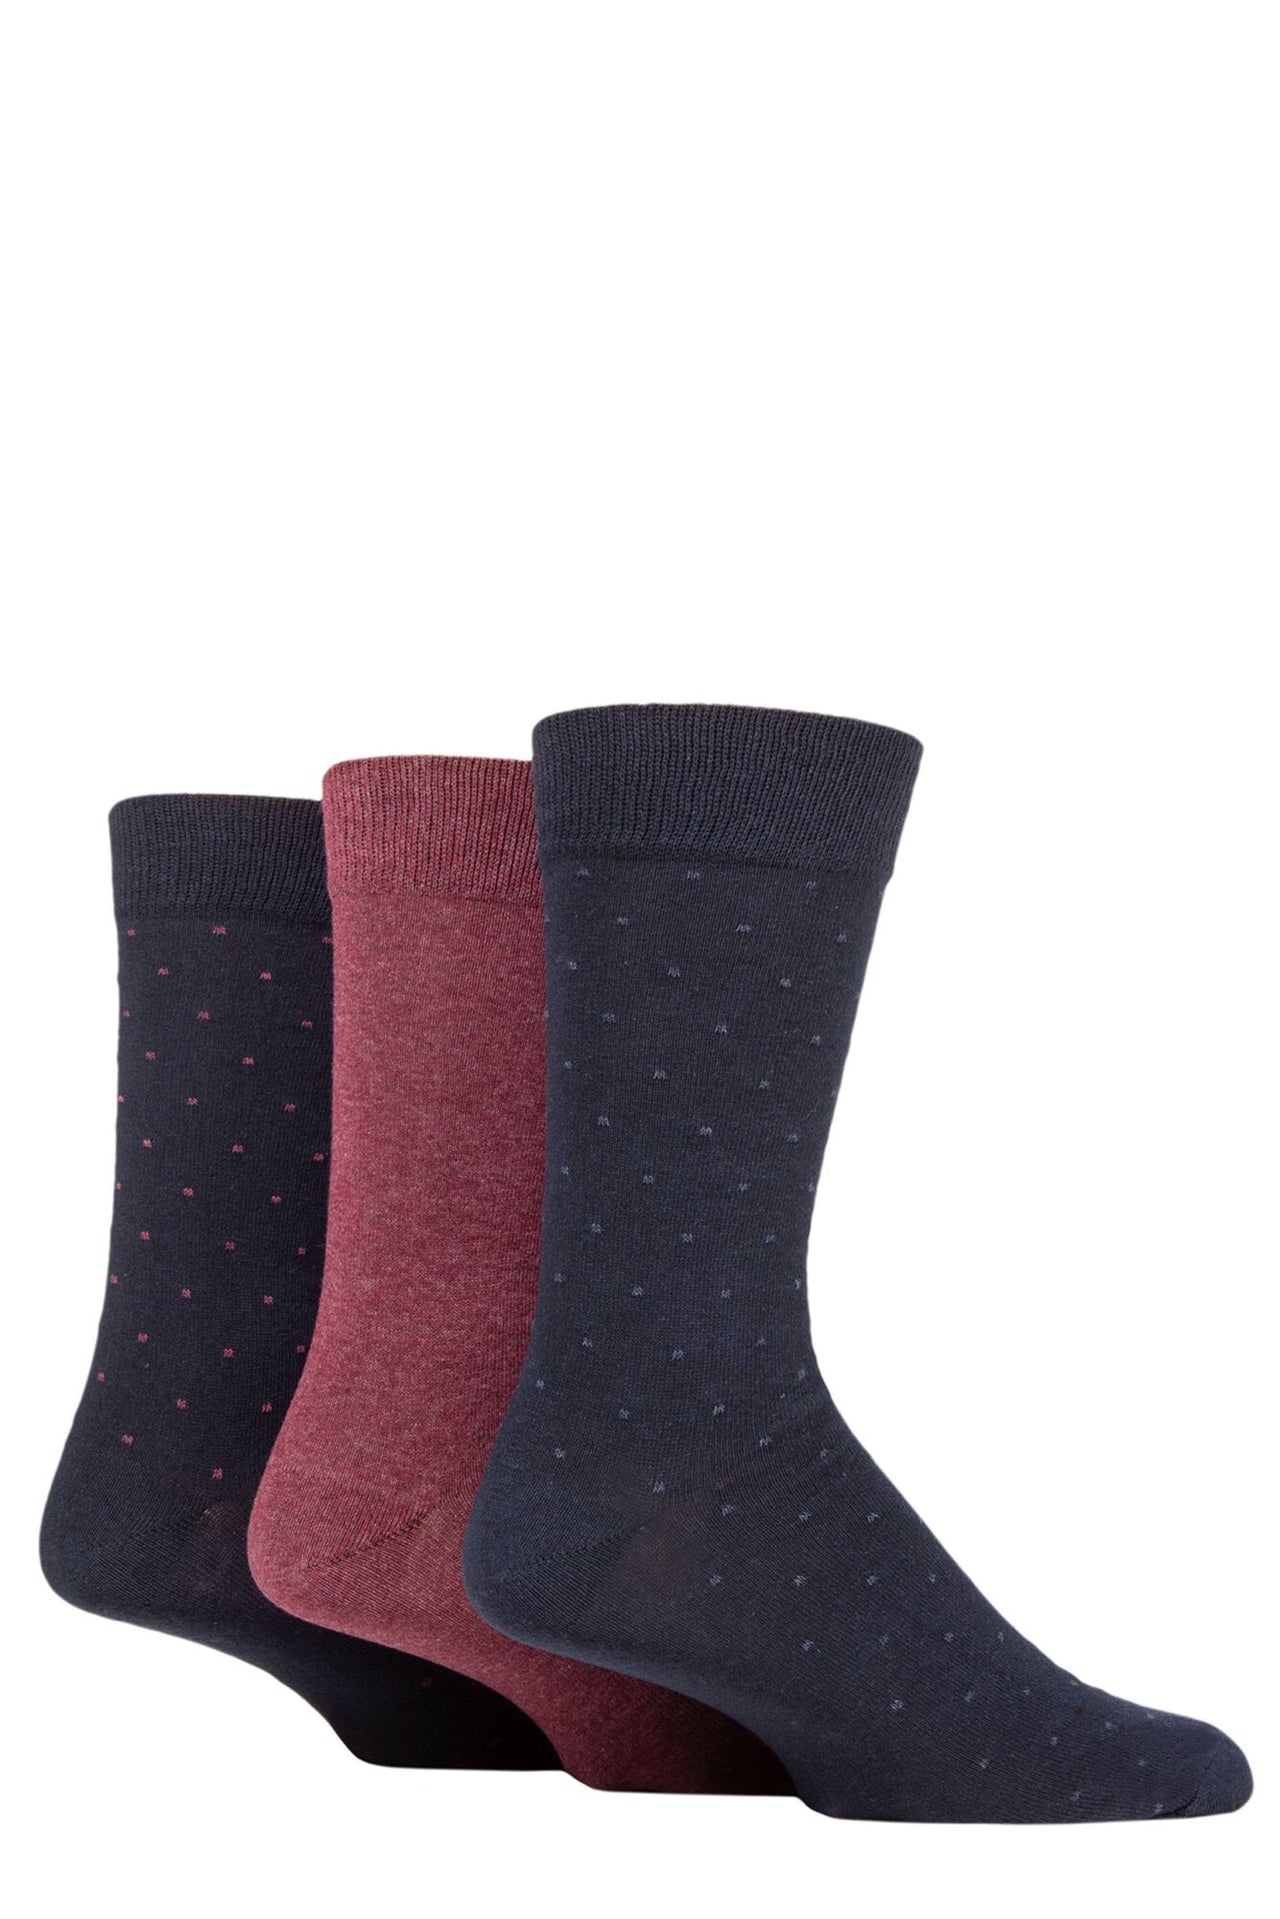 Men's 3 Pair Pringle 100% Recycled Navy Cotton Stripe Socks